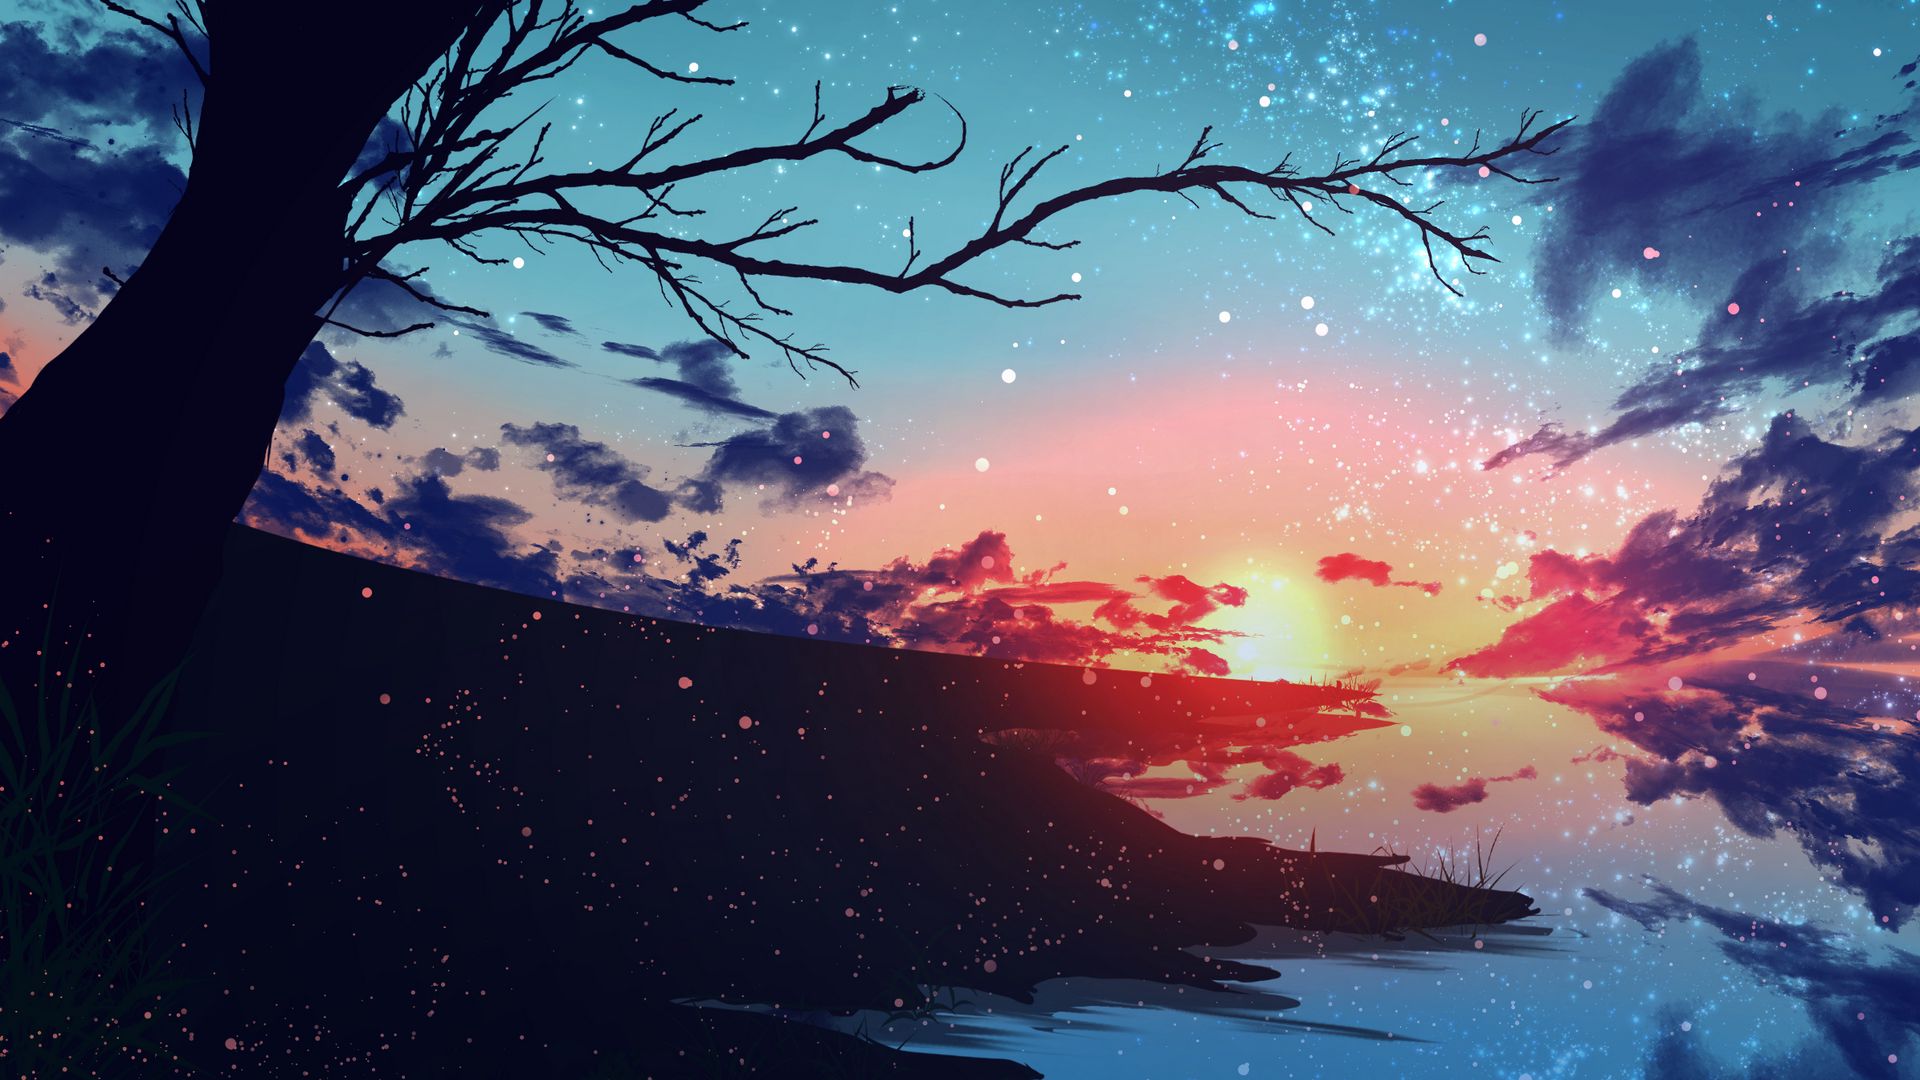 Beautiful Anime Landscape Wallpaper - XFXWallpapers